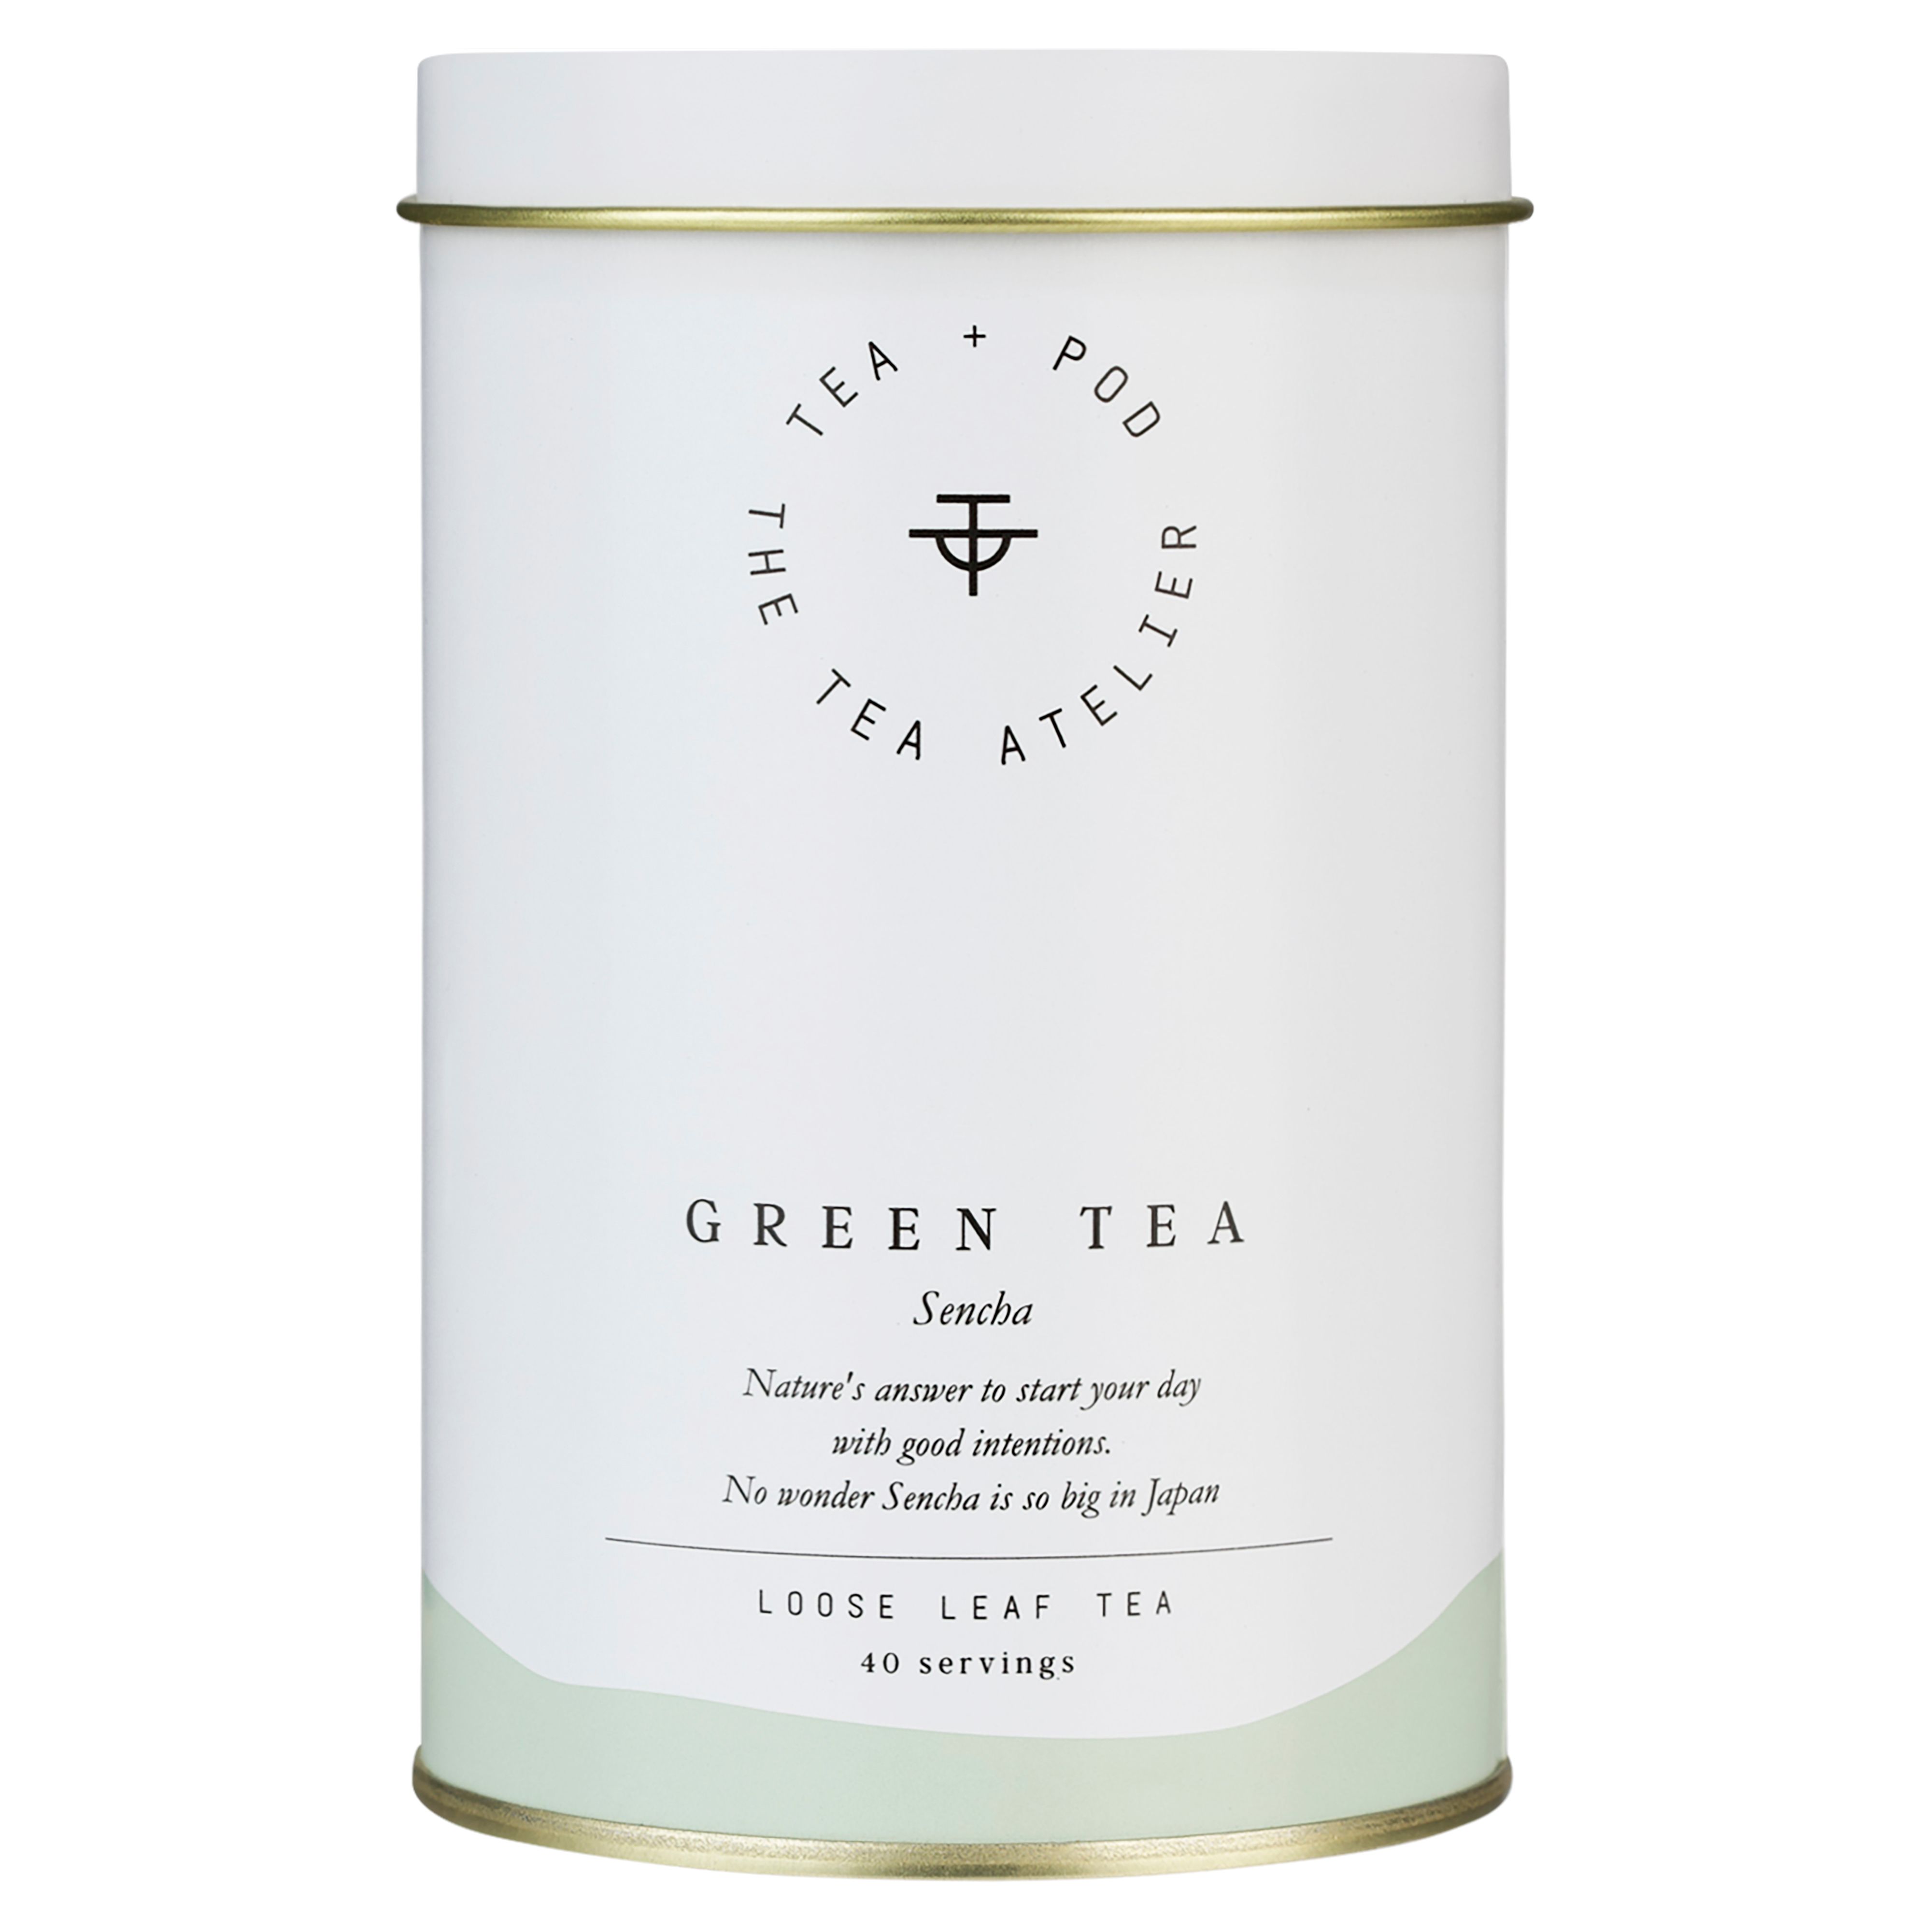 Teapod No.02 Green Tea - Grüner Tee